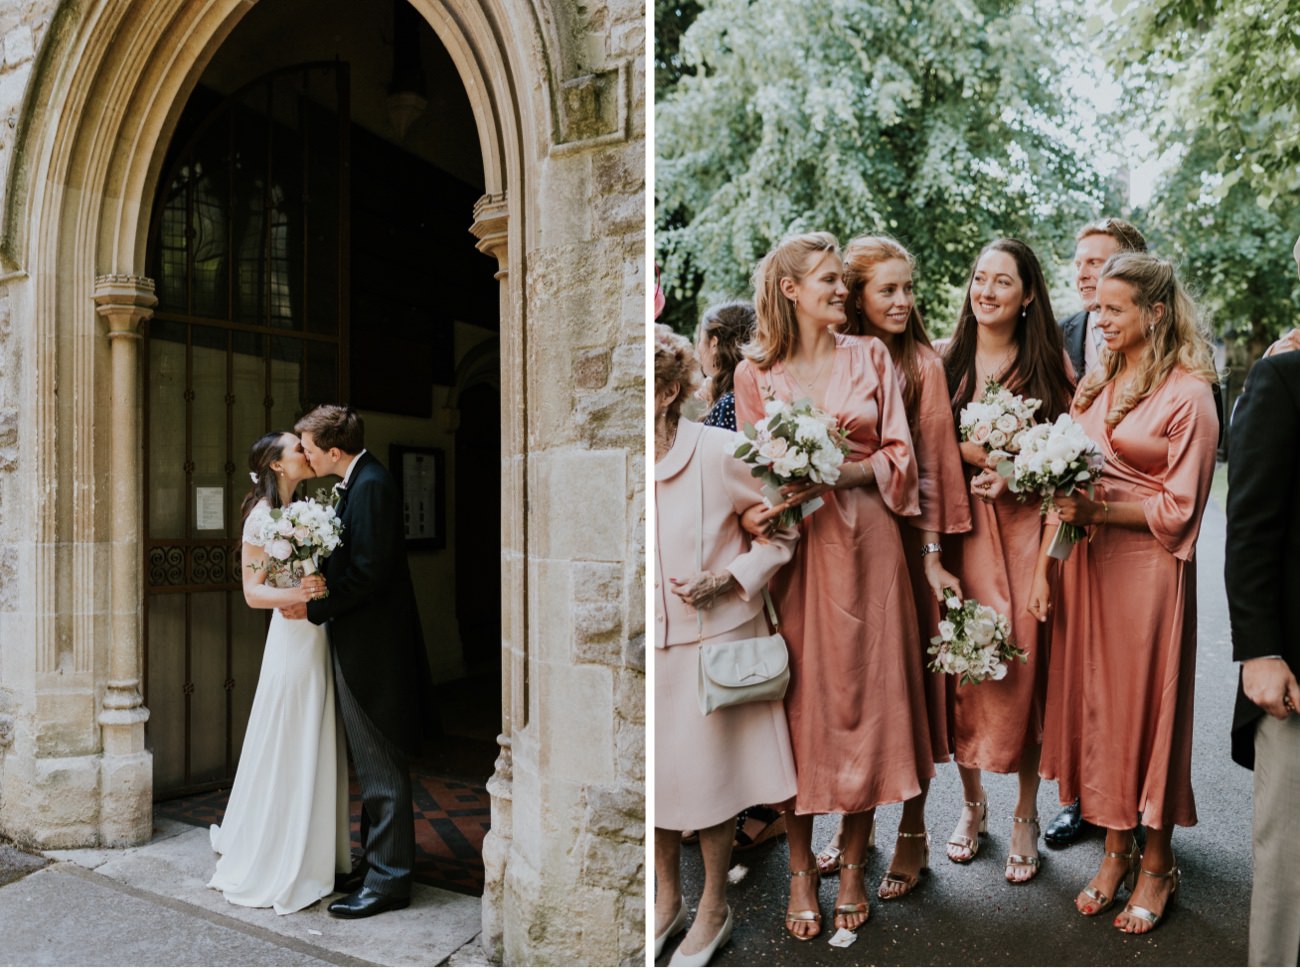 A kiss outside the church, bridesmaids smiling